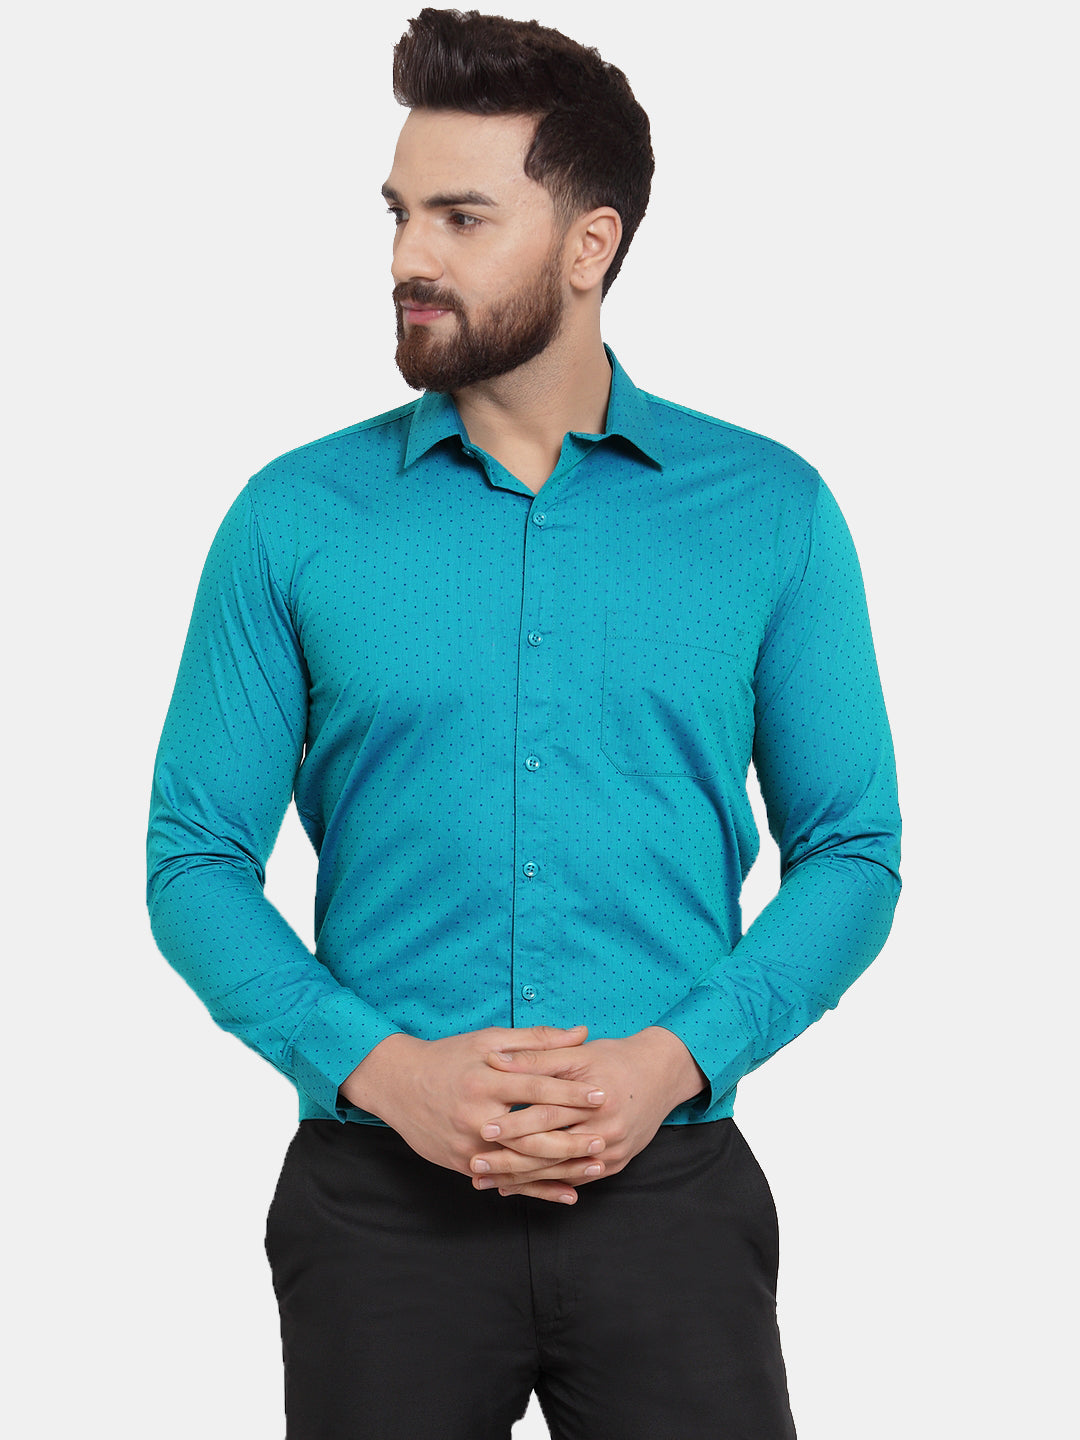 Men's Green Cotton Polka Dots Formal Shirts ( SF 739Green ) - Jainish